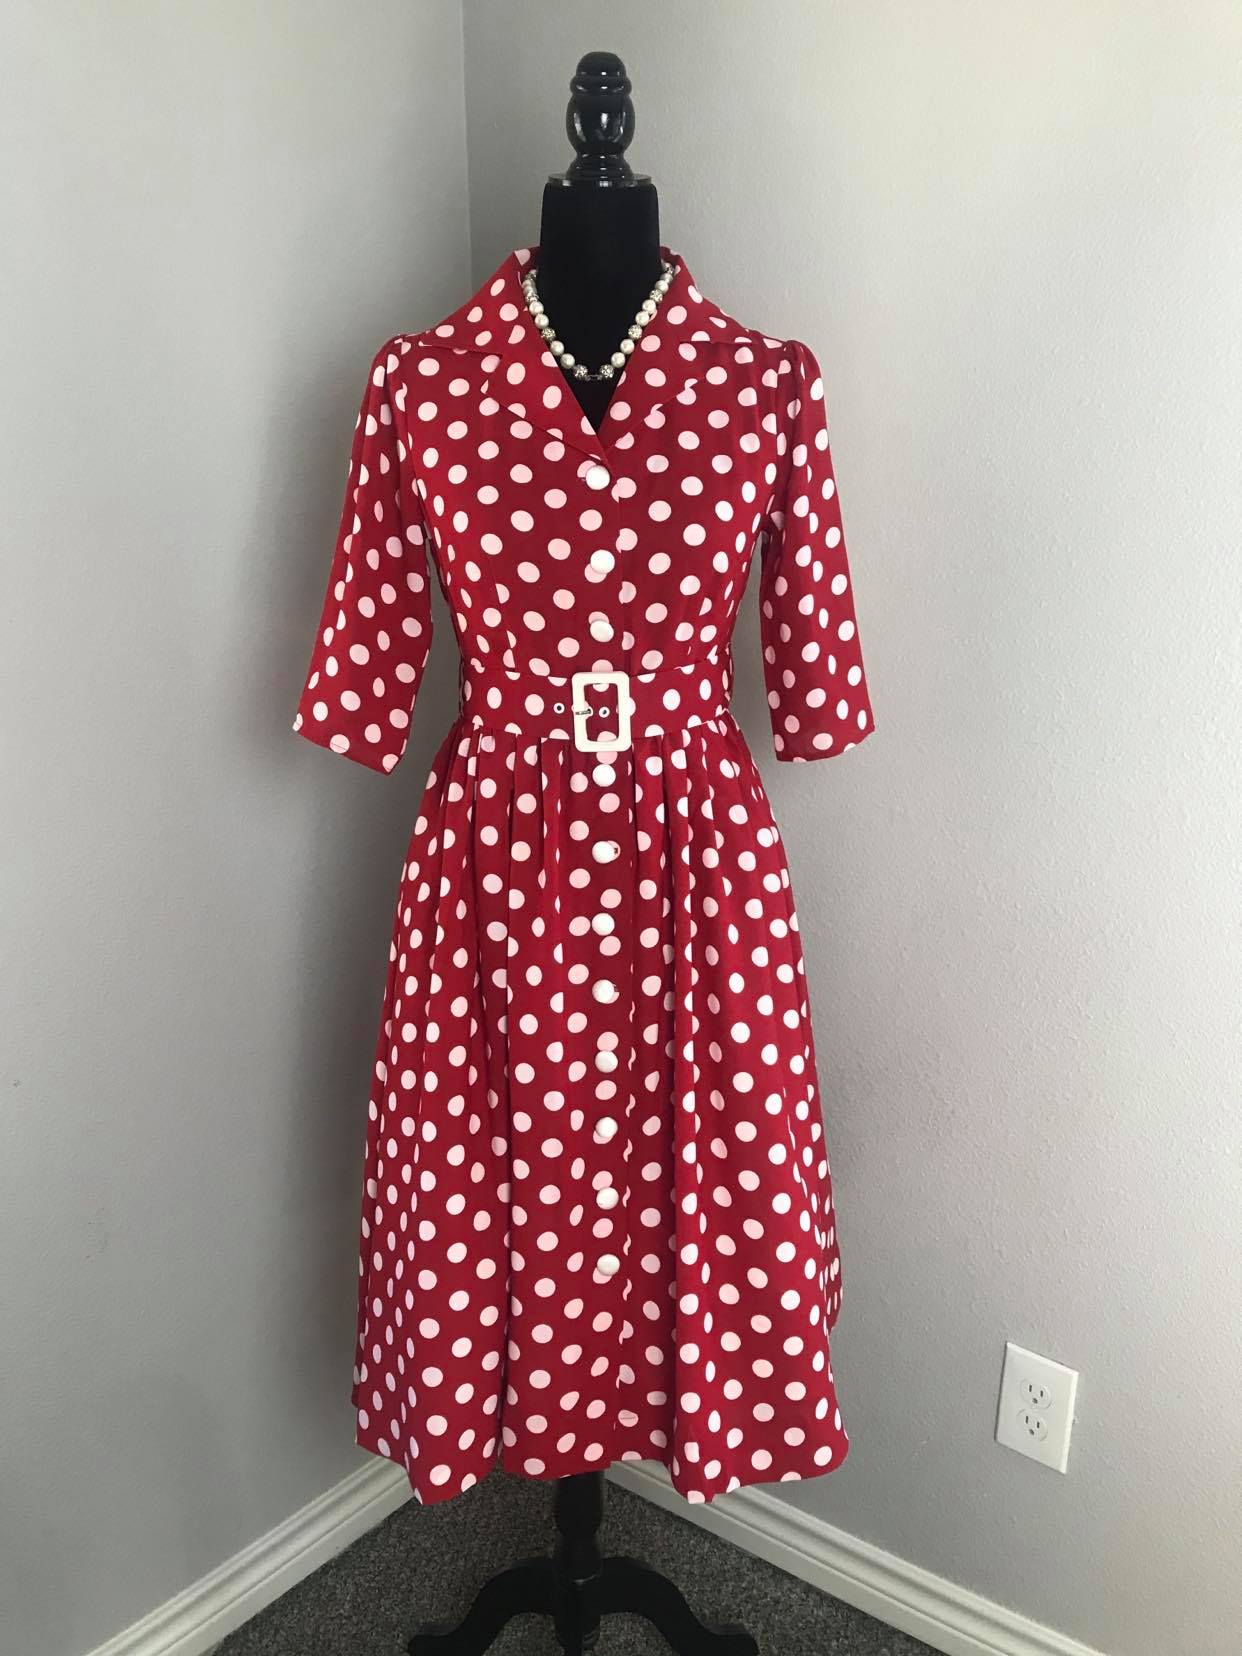 Kathy Dress in Red White Polka Dots size M - Shop women style vintage, Audrey Hepburn jackets online -Christine